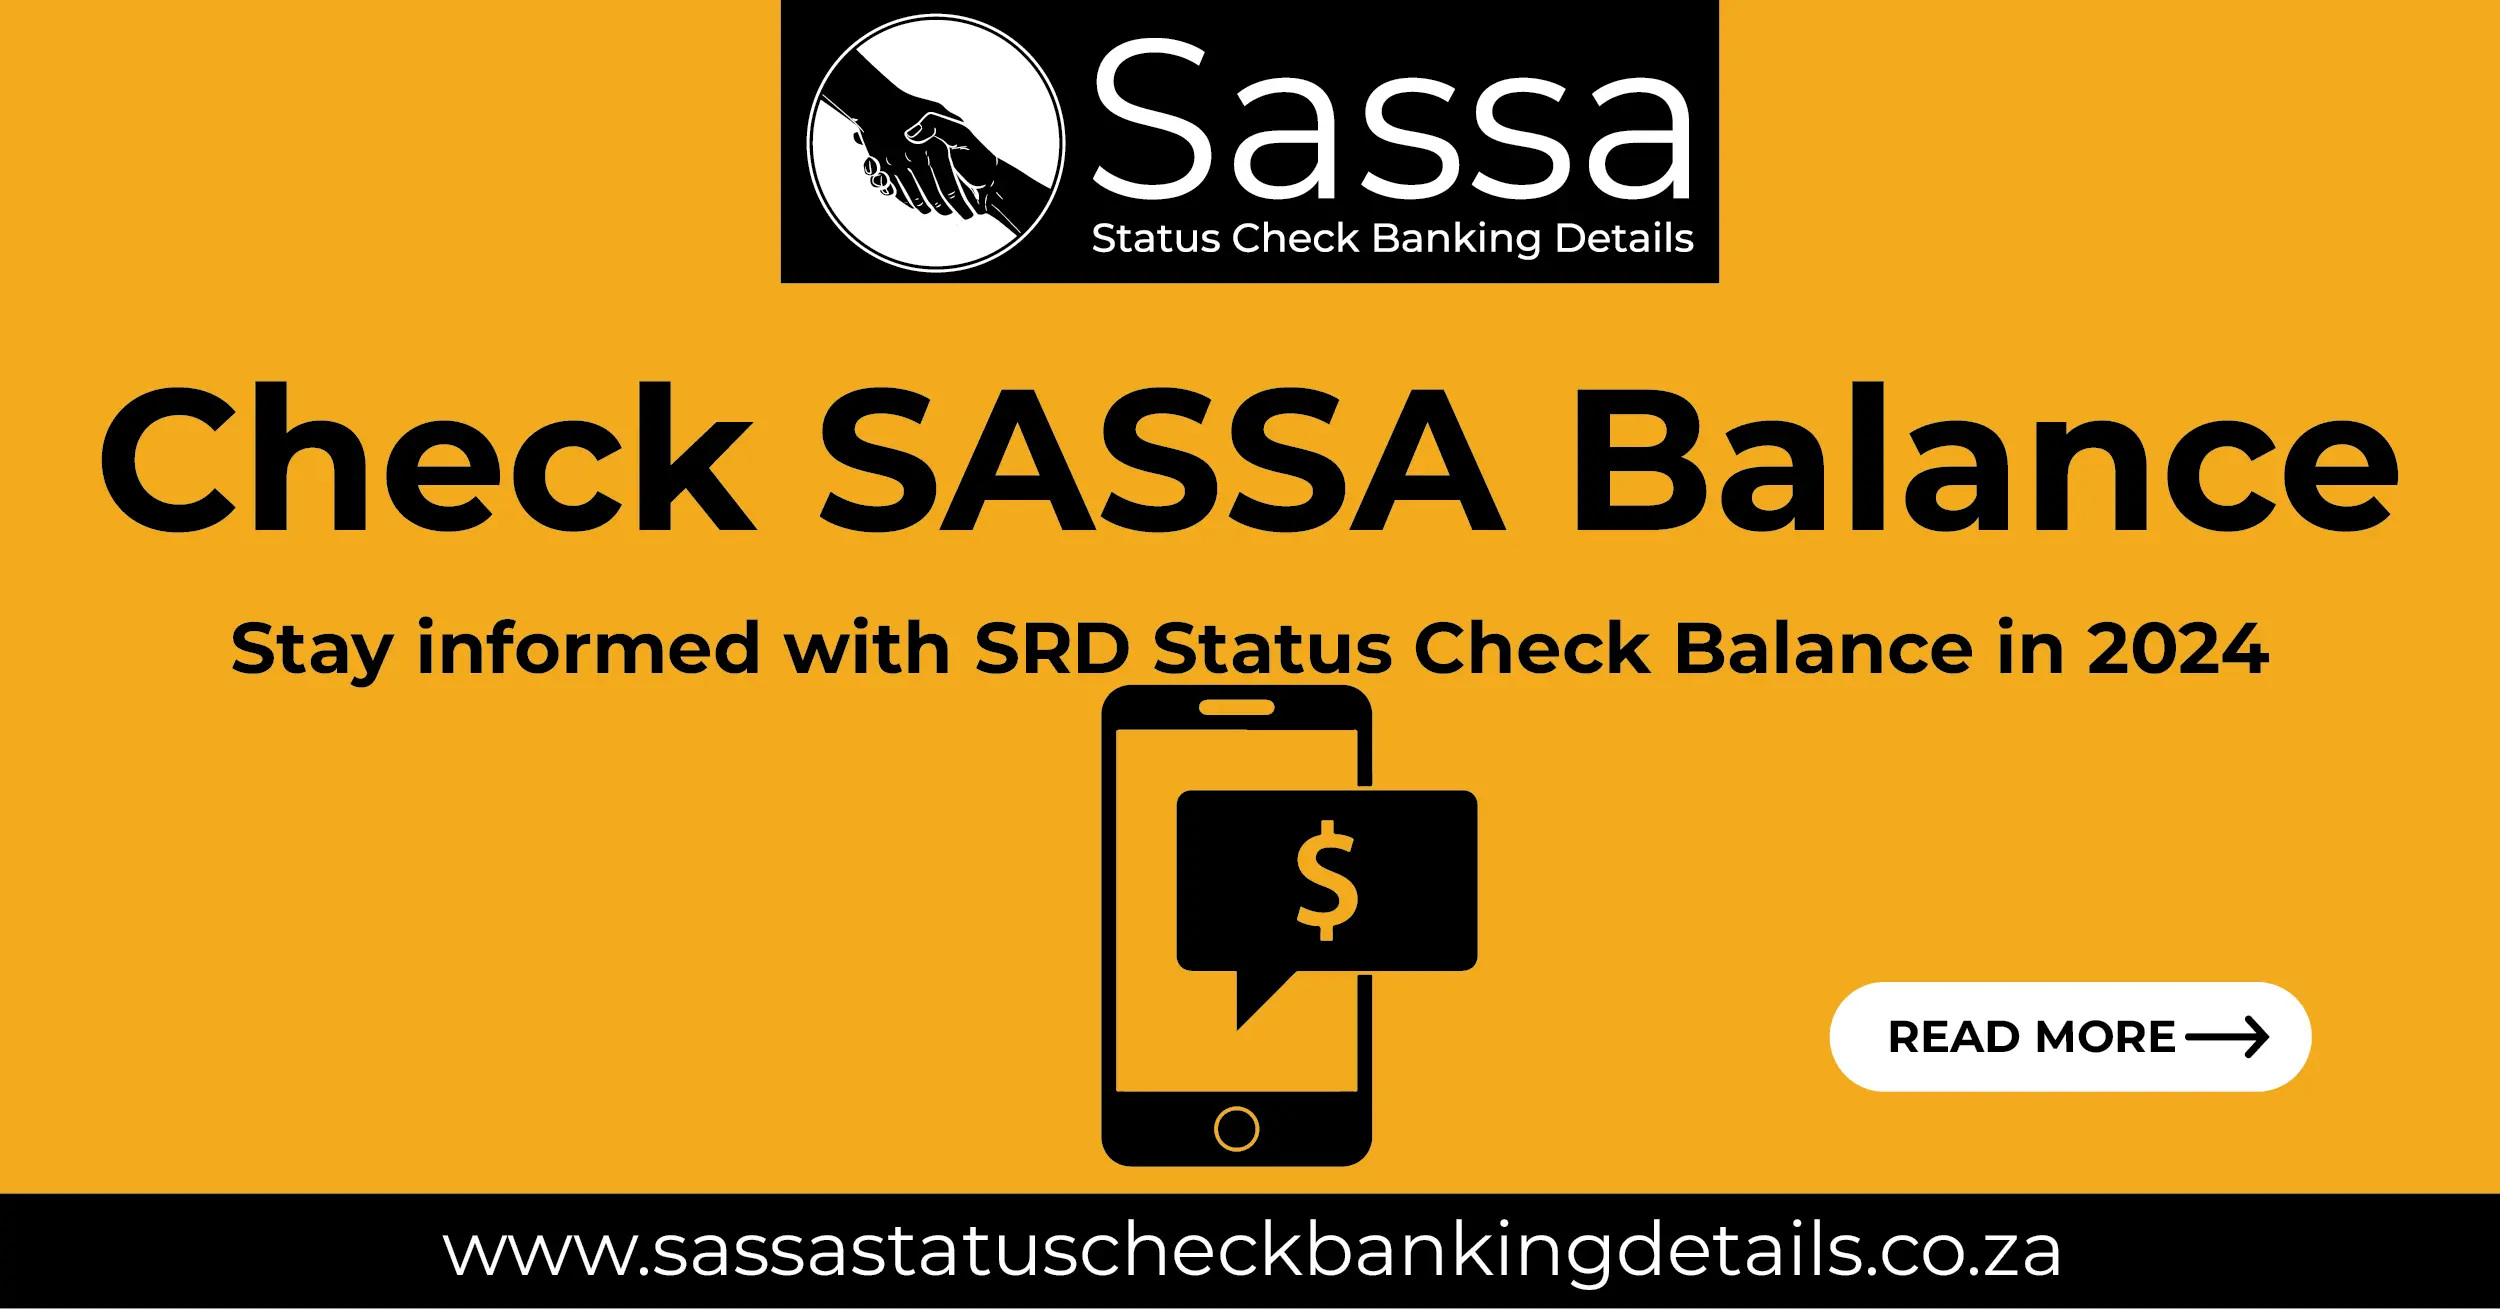 Check SASSA Balance: Stay informed with SRD Status Check Balance in 2024